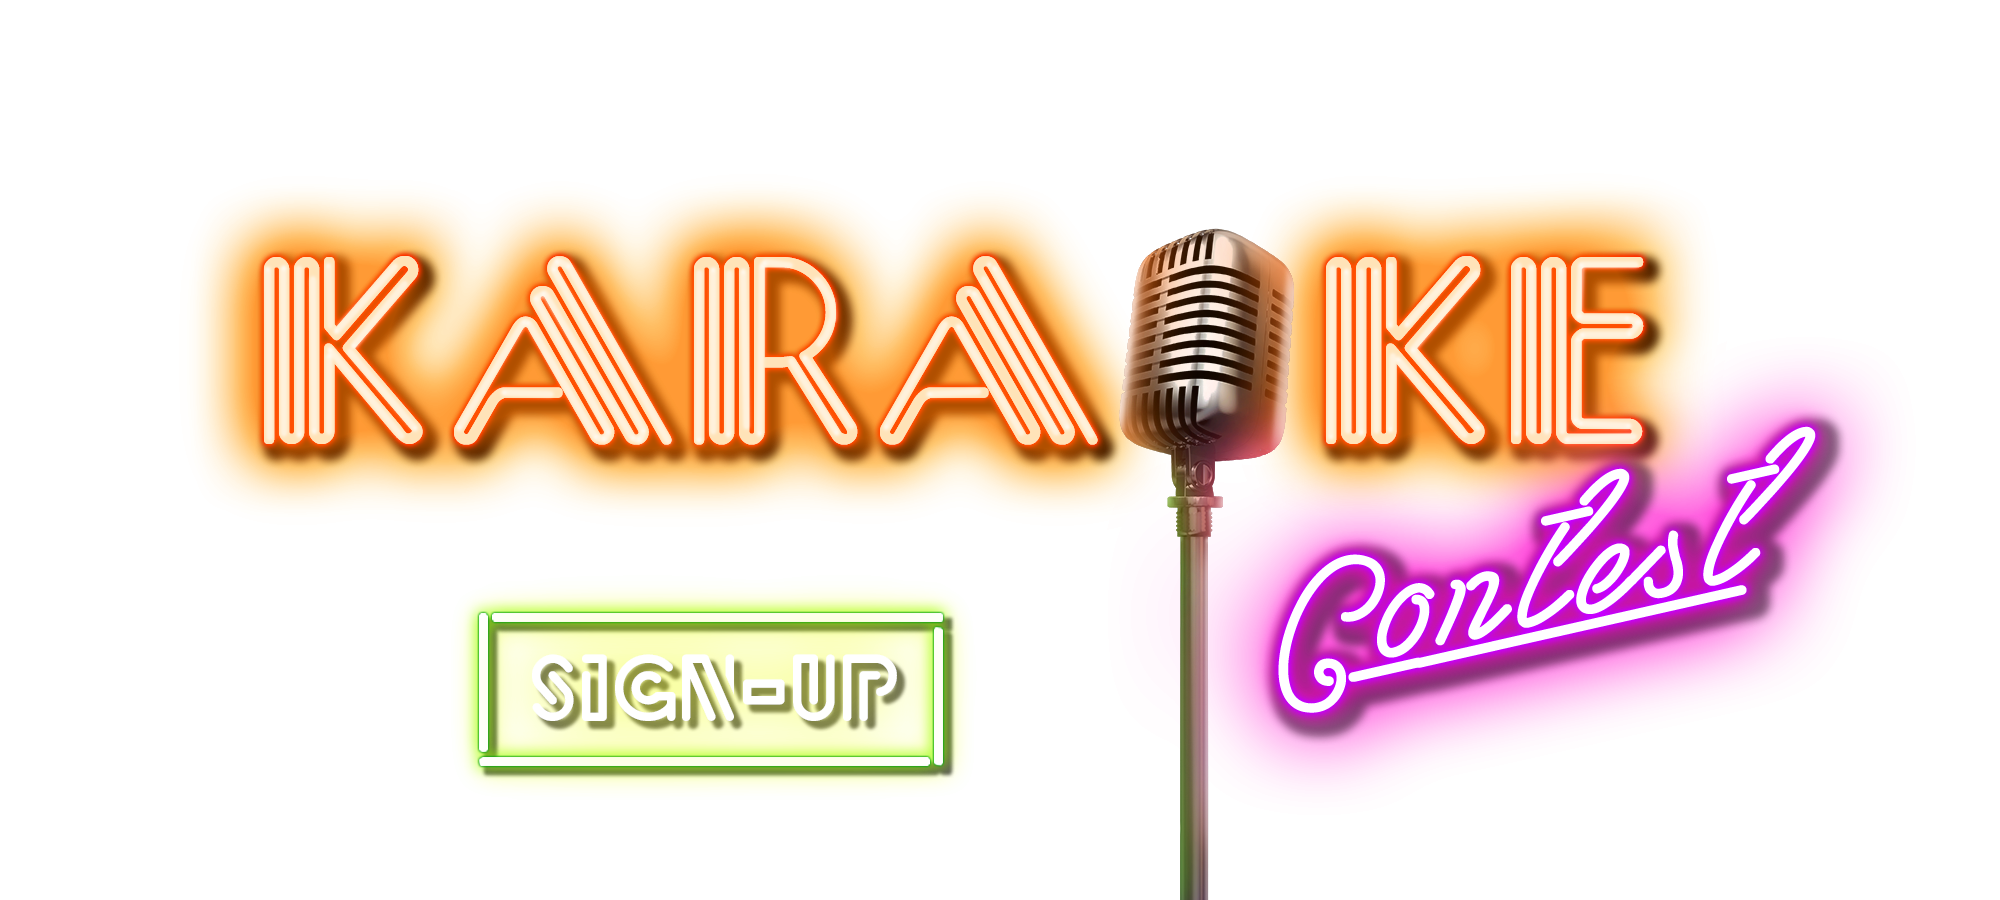 Караоке. Караоке надпись. Караоке лого. Микрофон логотип. Karaoke downloads